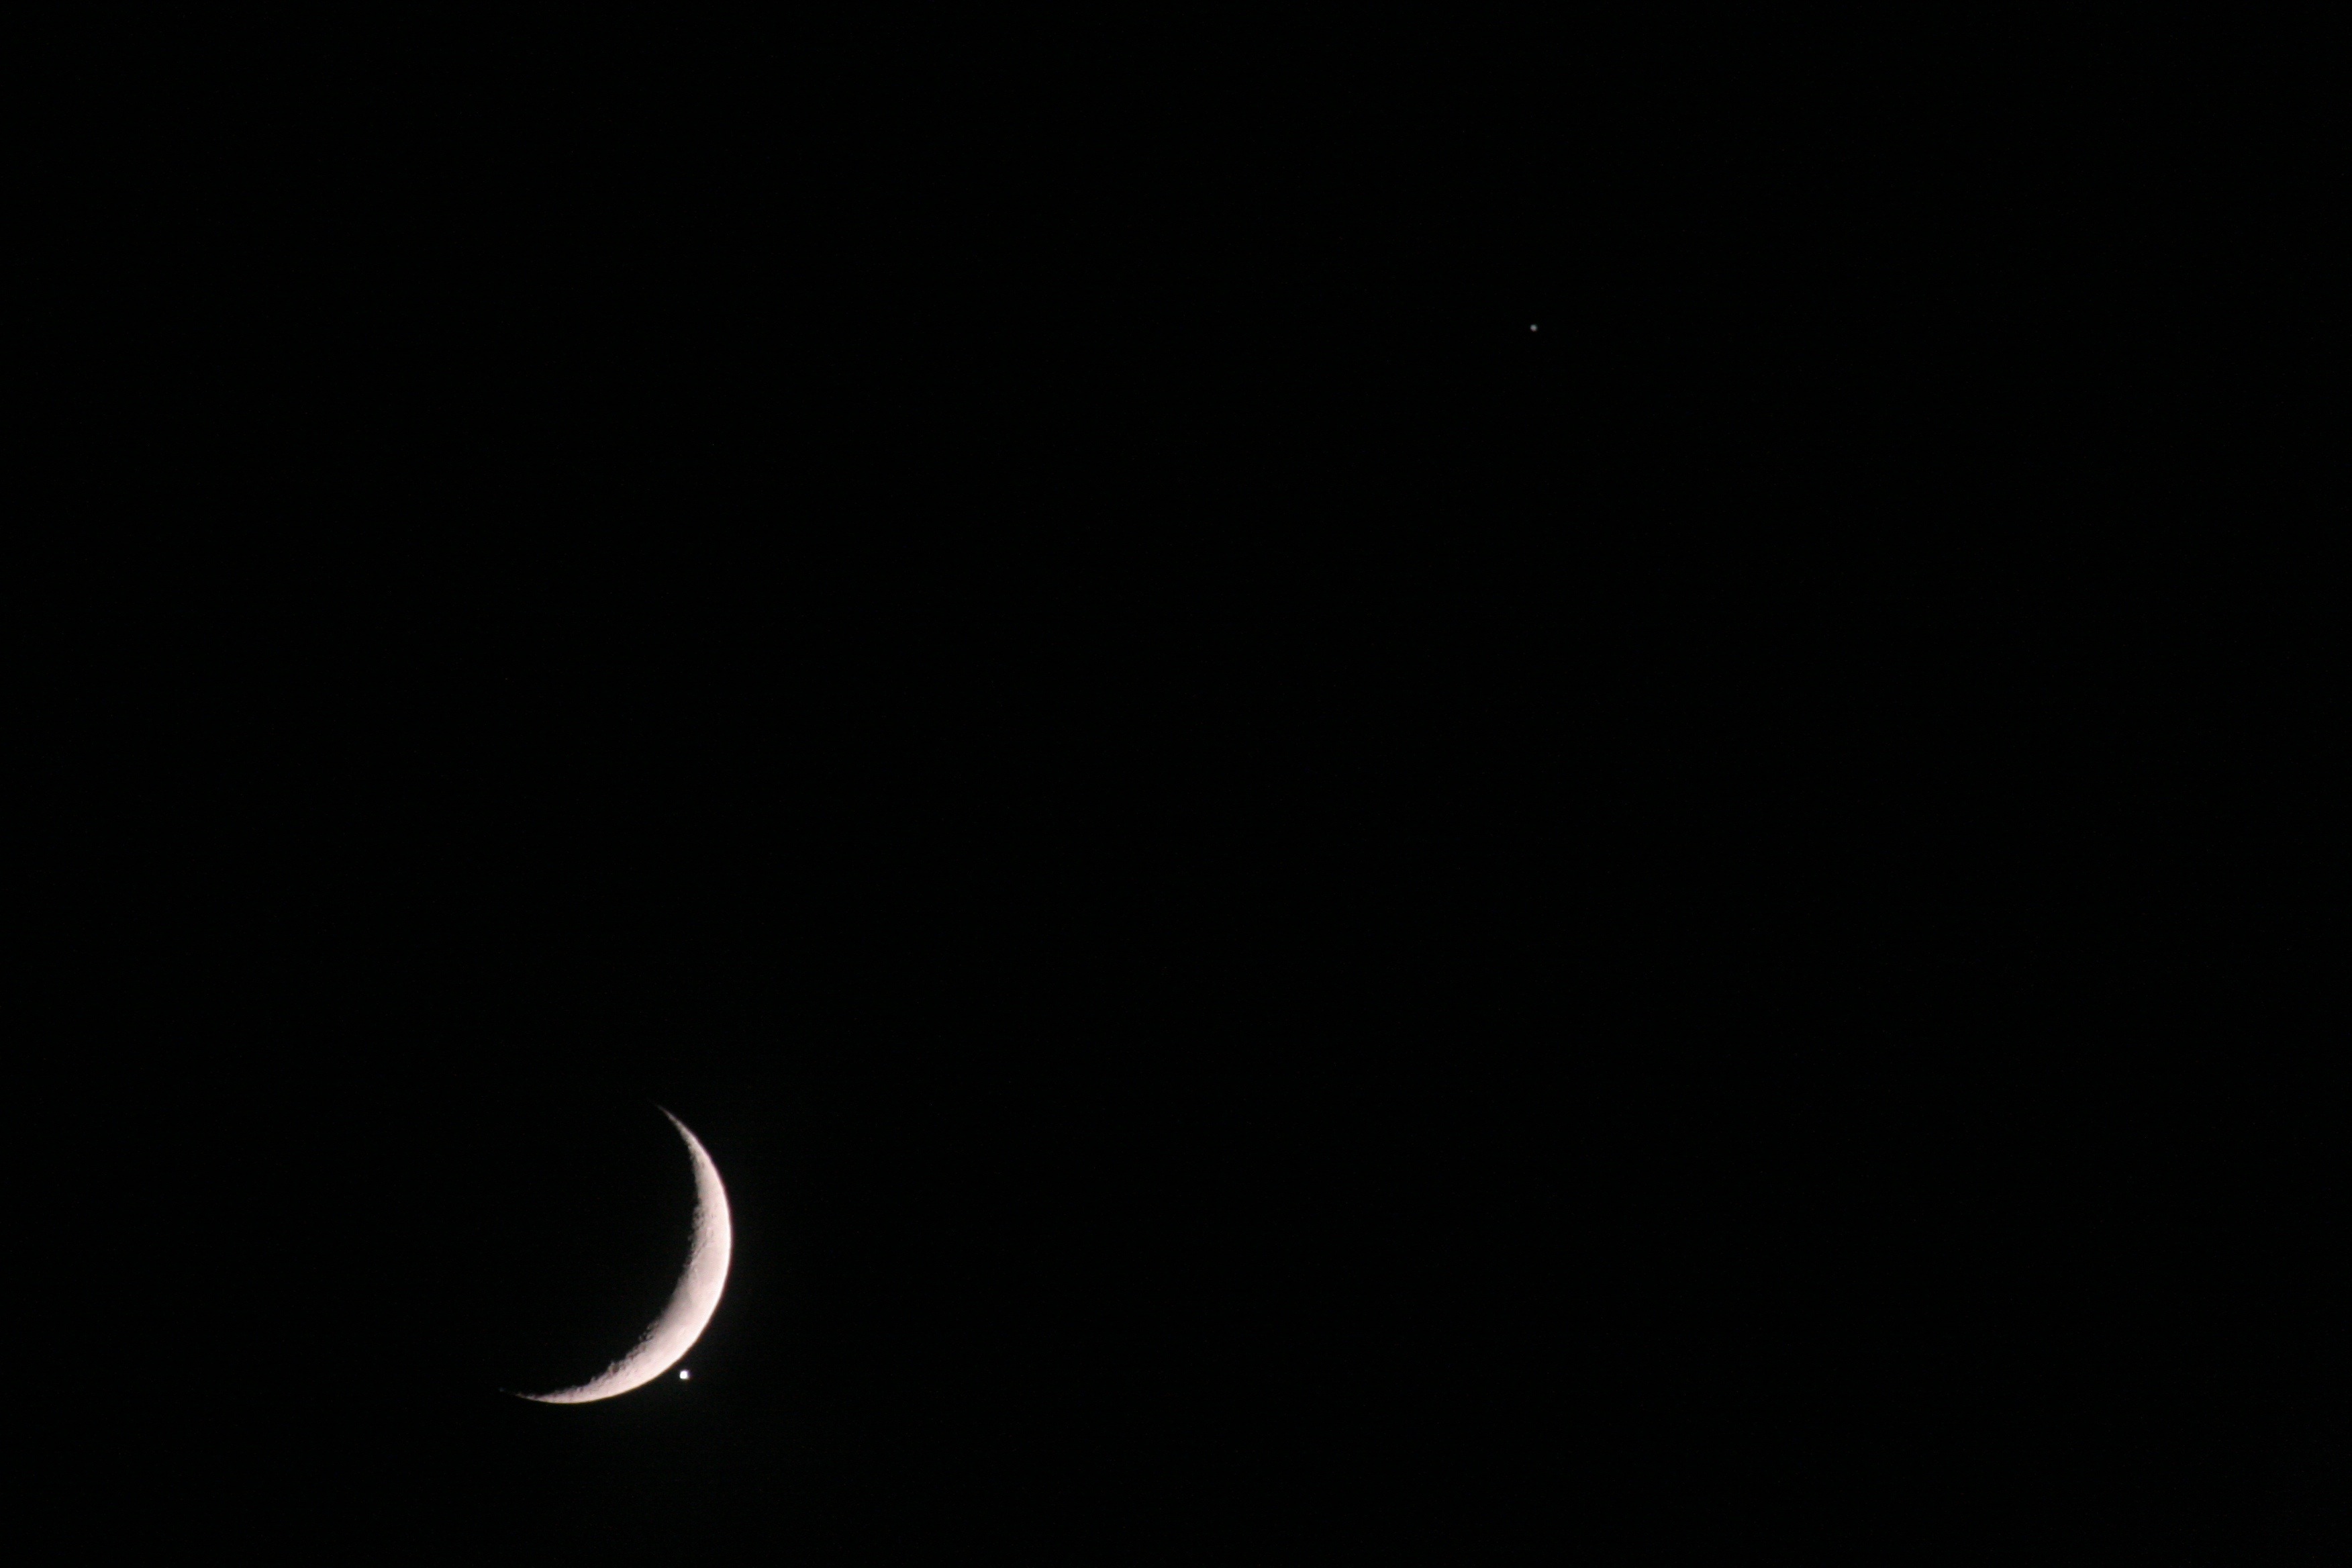 Moon, Venus and Jupiter